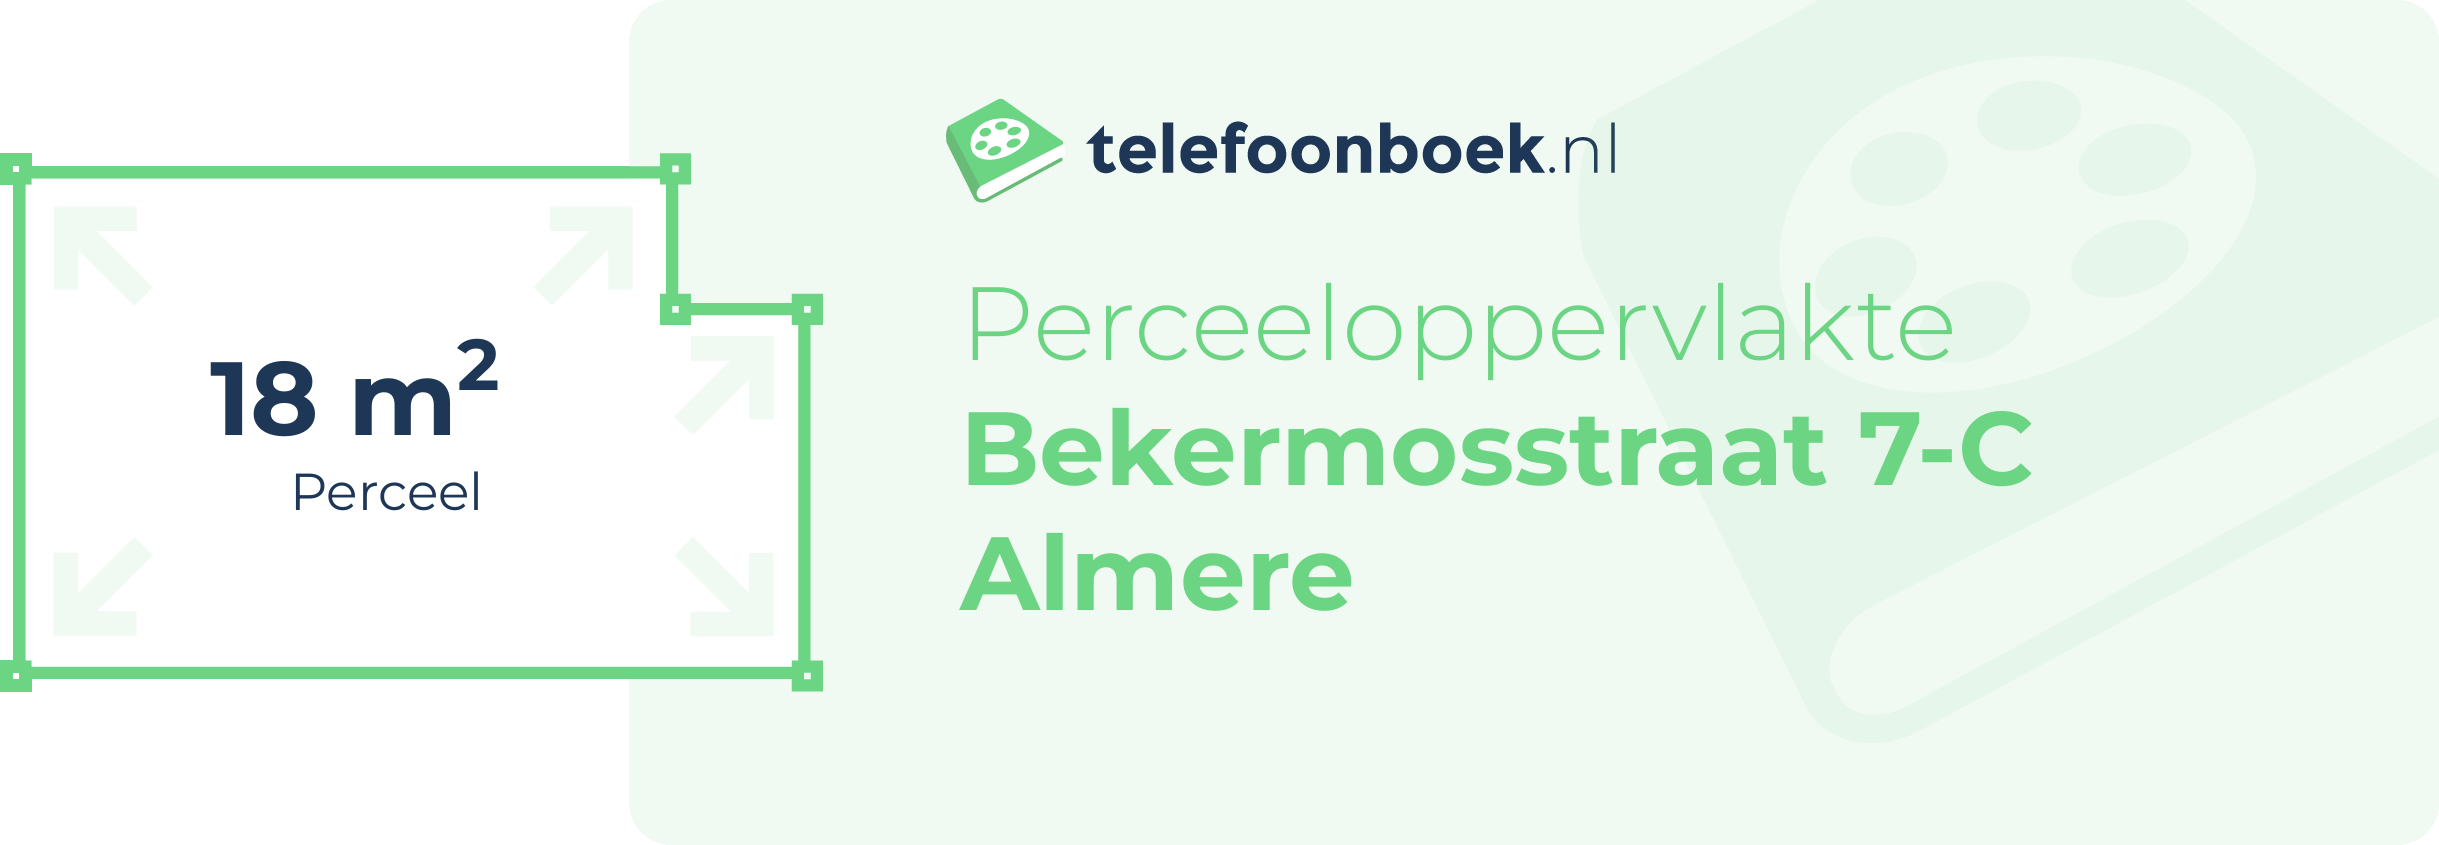 Perceeloppervlakte Bekermosstraat 7-C Almere